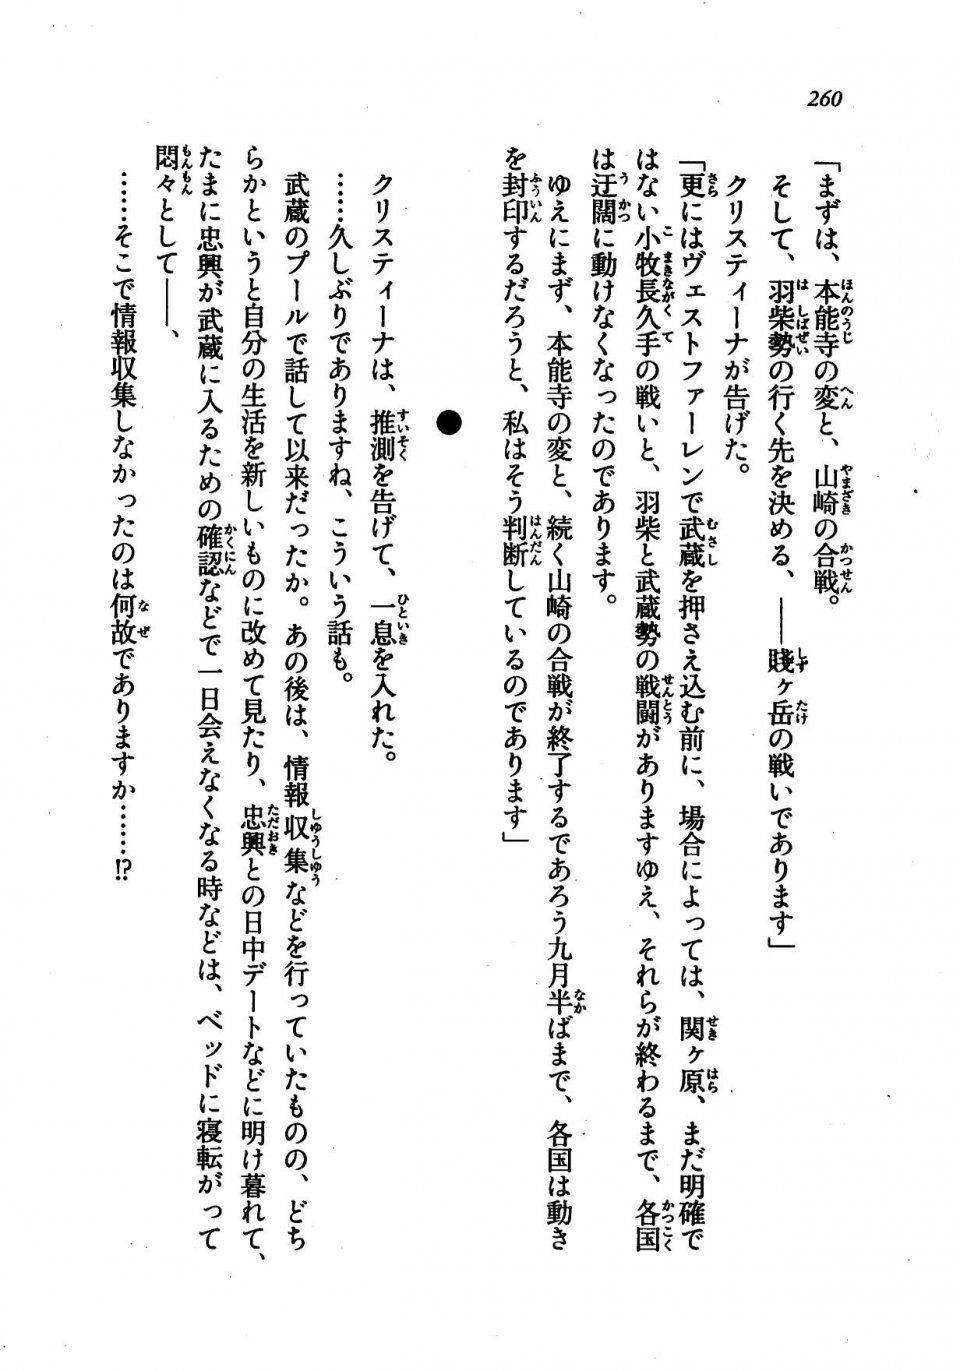 Kyoukai Senjou no Horizon LN Vol 21(8C) Part 1 - Photo #259